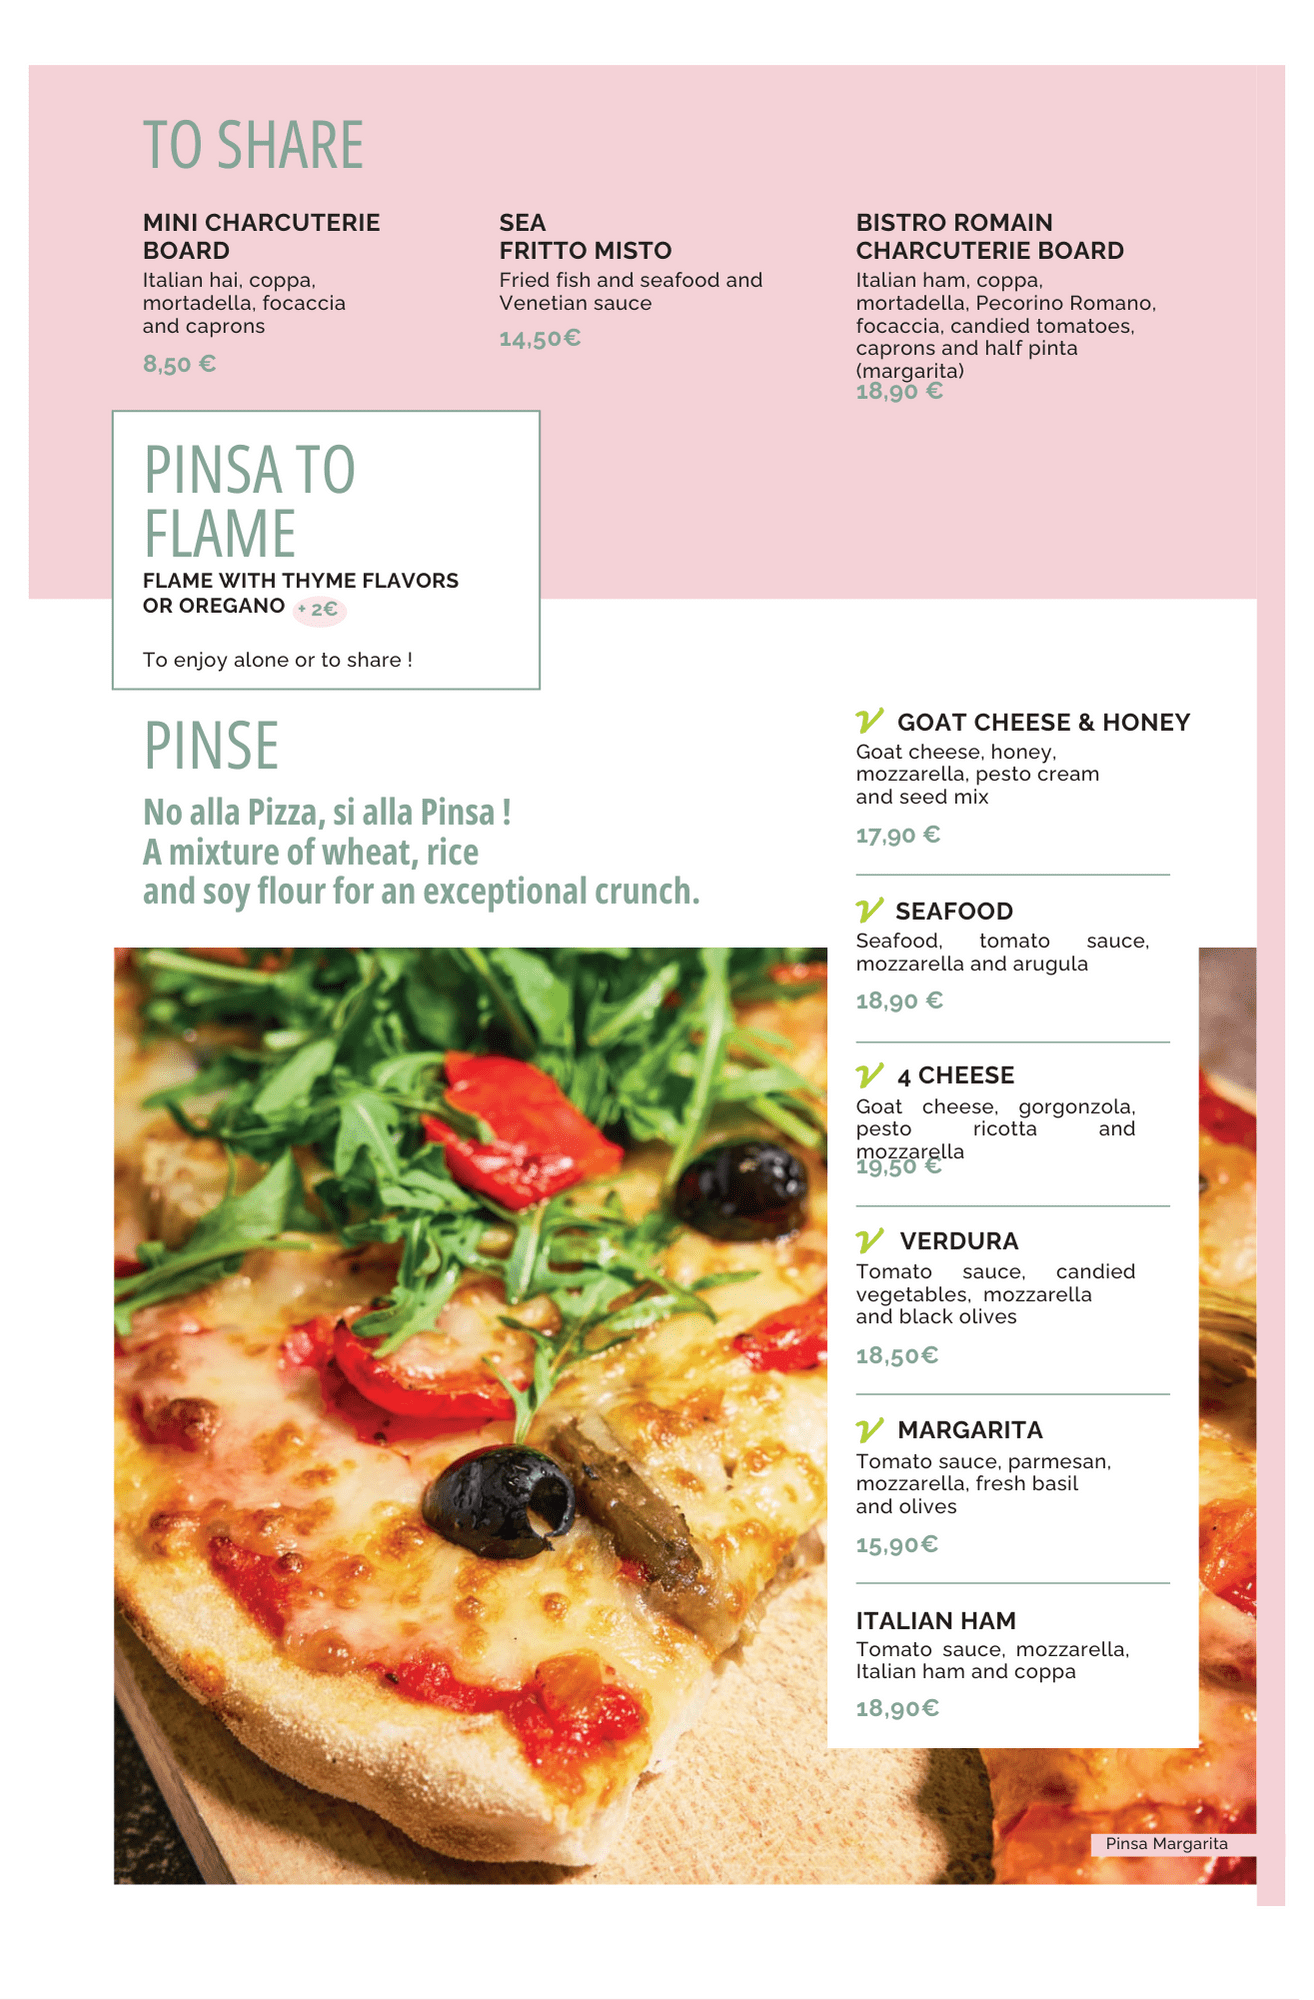 PIzza paris Clichy Pinse pinsa sharing food restaurant flambée  